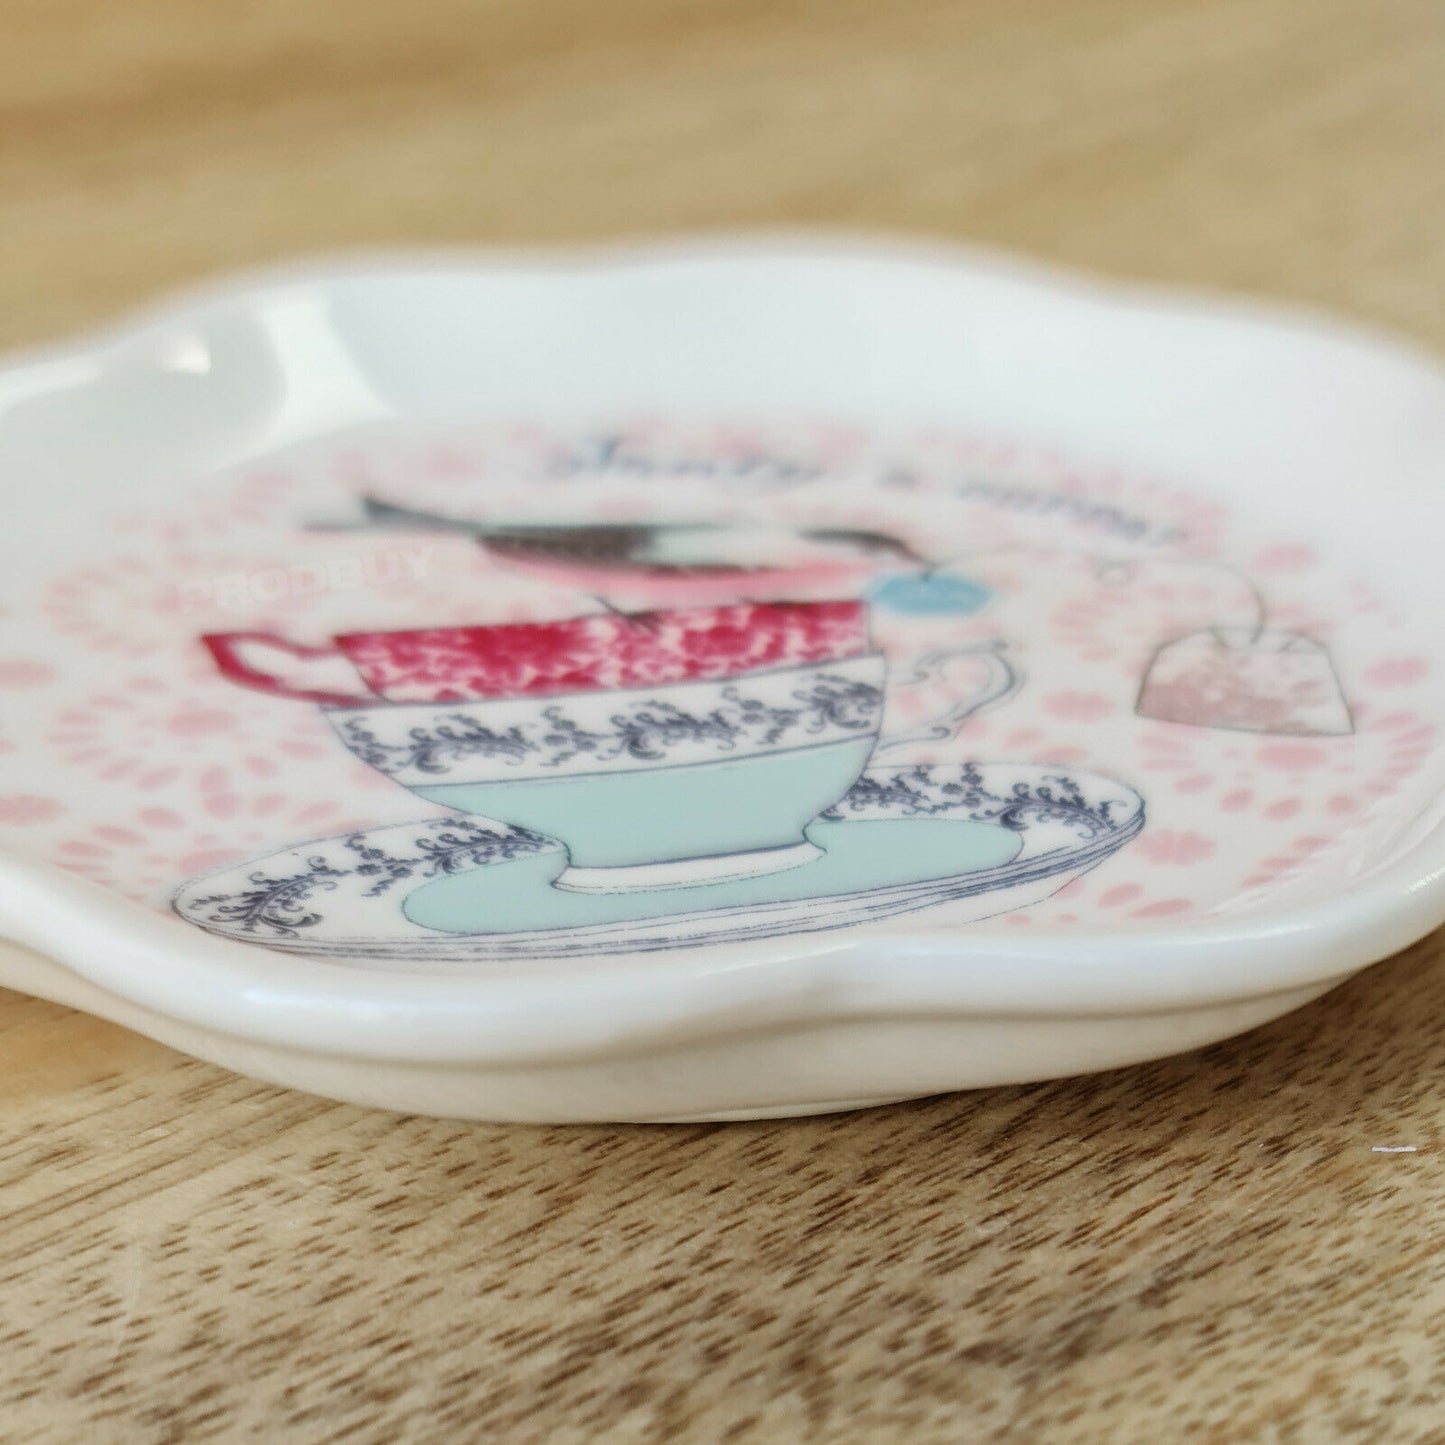 Small Ceramic 'Fancy A Cuppa' Teabag Tidy